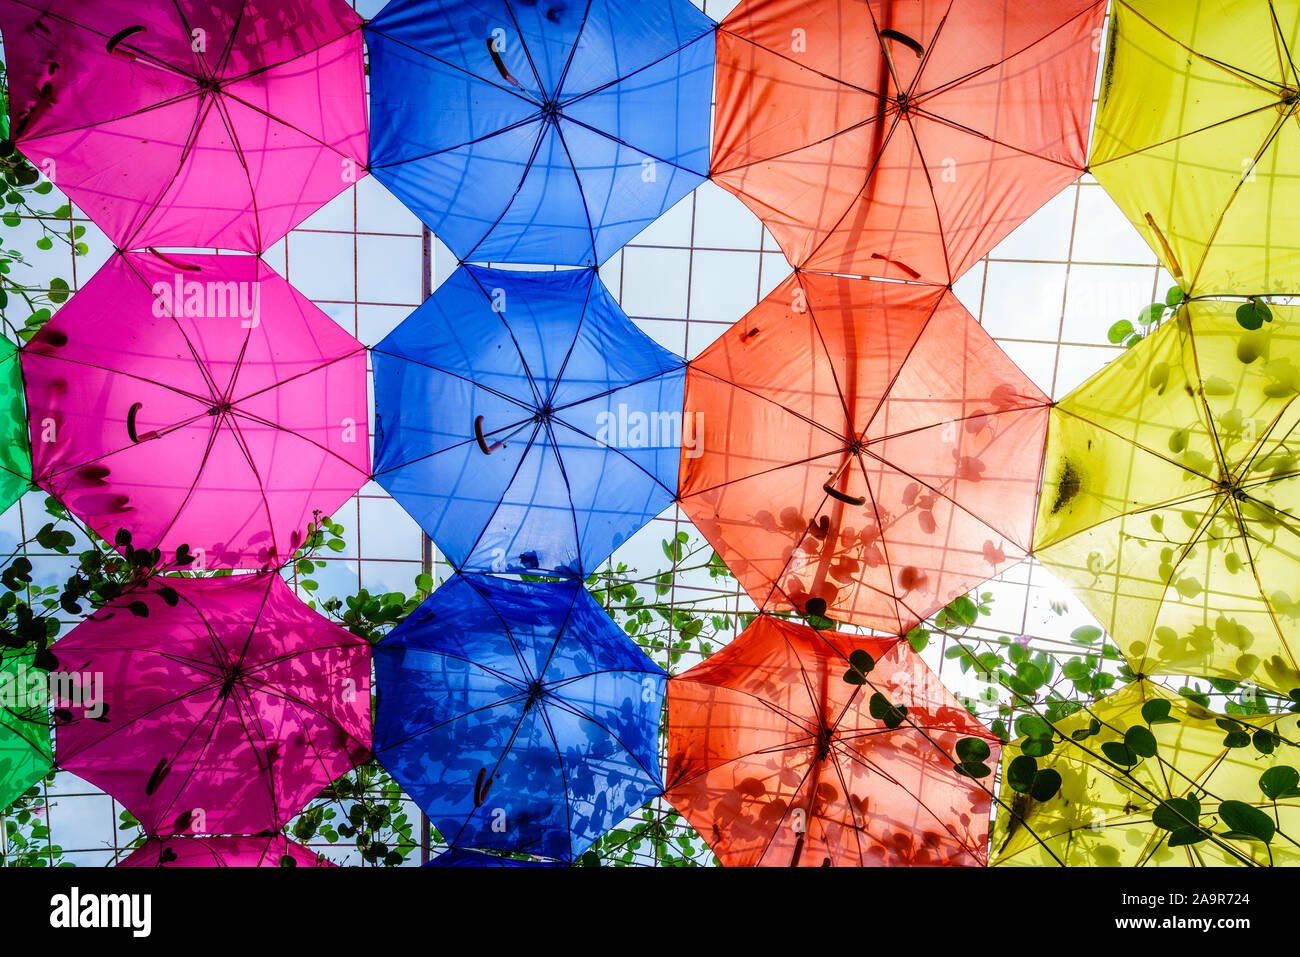 Dubai, UAE, January 22, 2018: Decorative umbrellas in Dubai Miracle Garden which is one of the main tourist attractions in Dubai, UAE Stock Photo